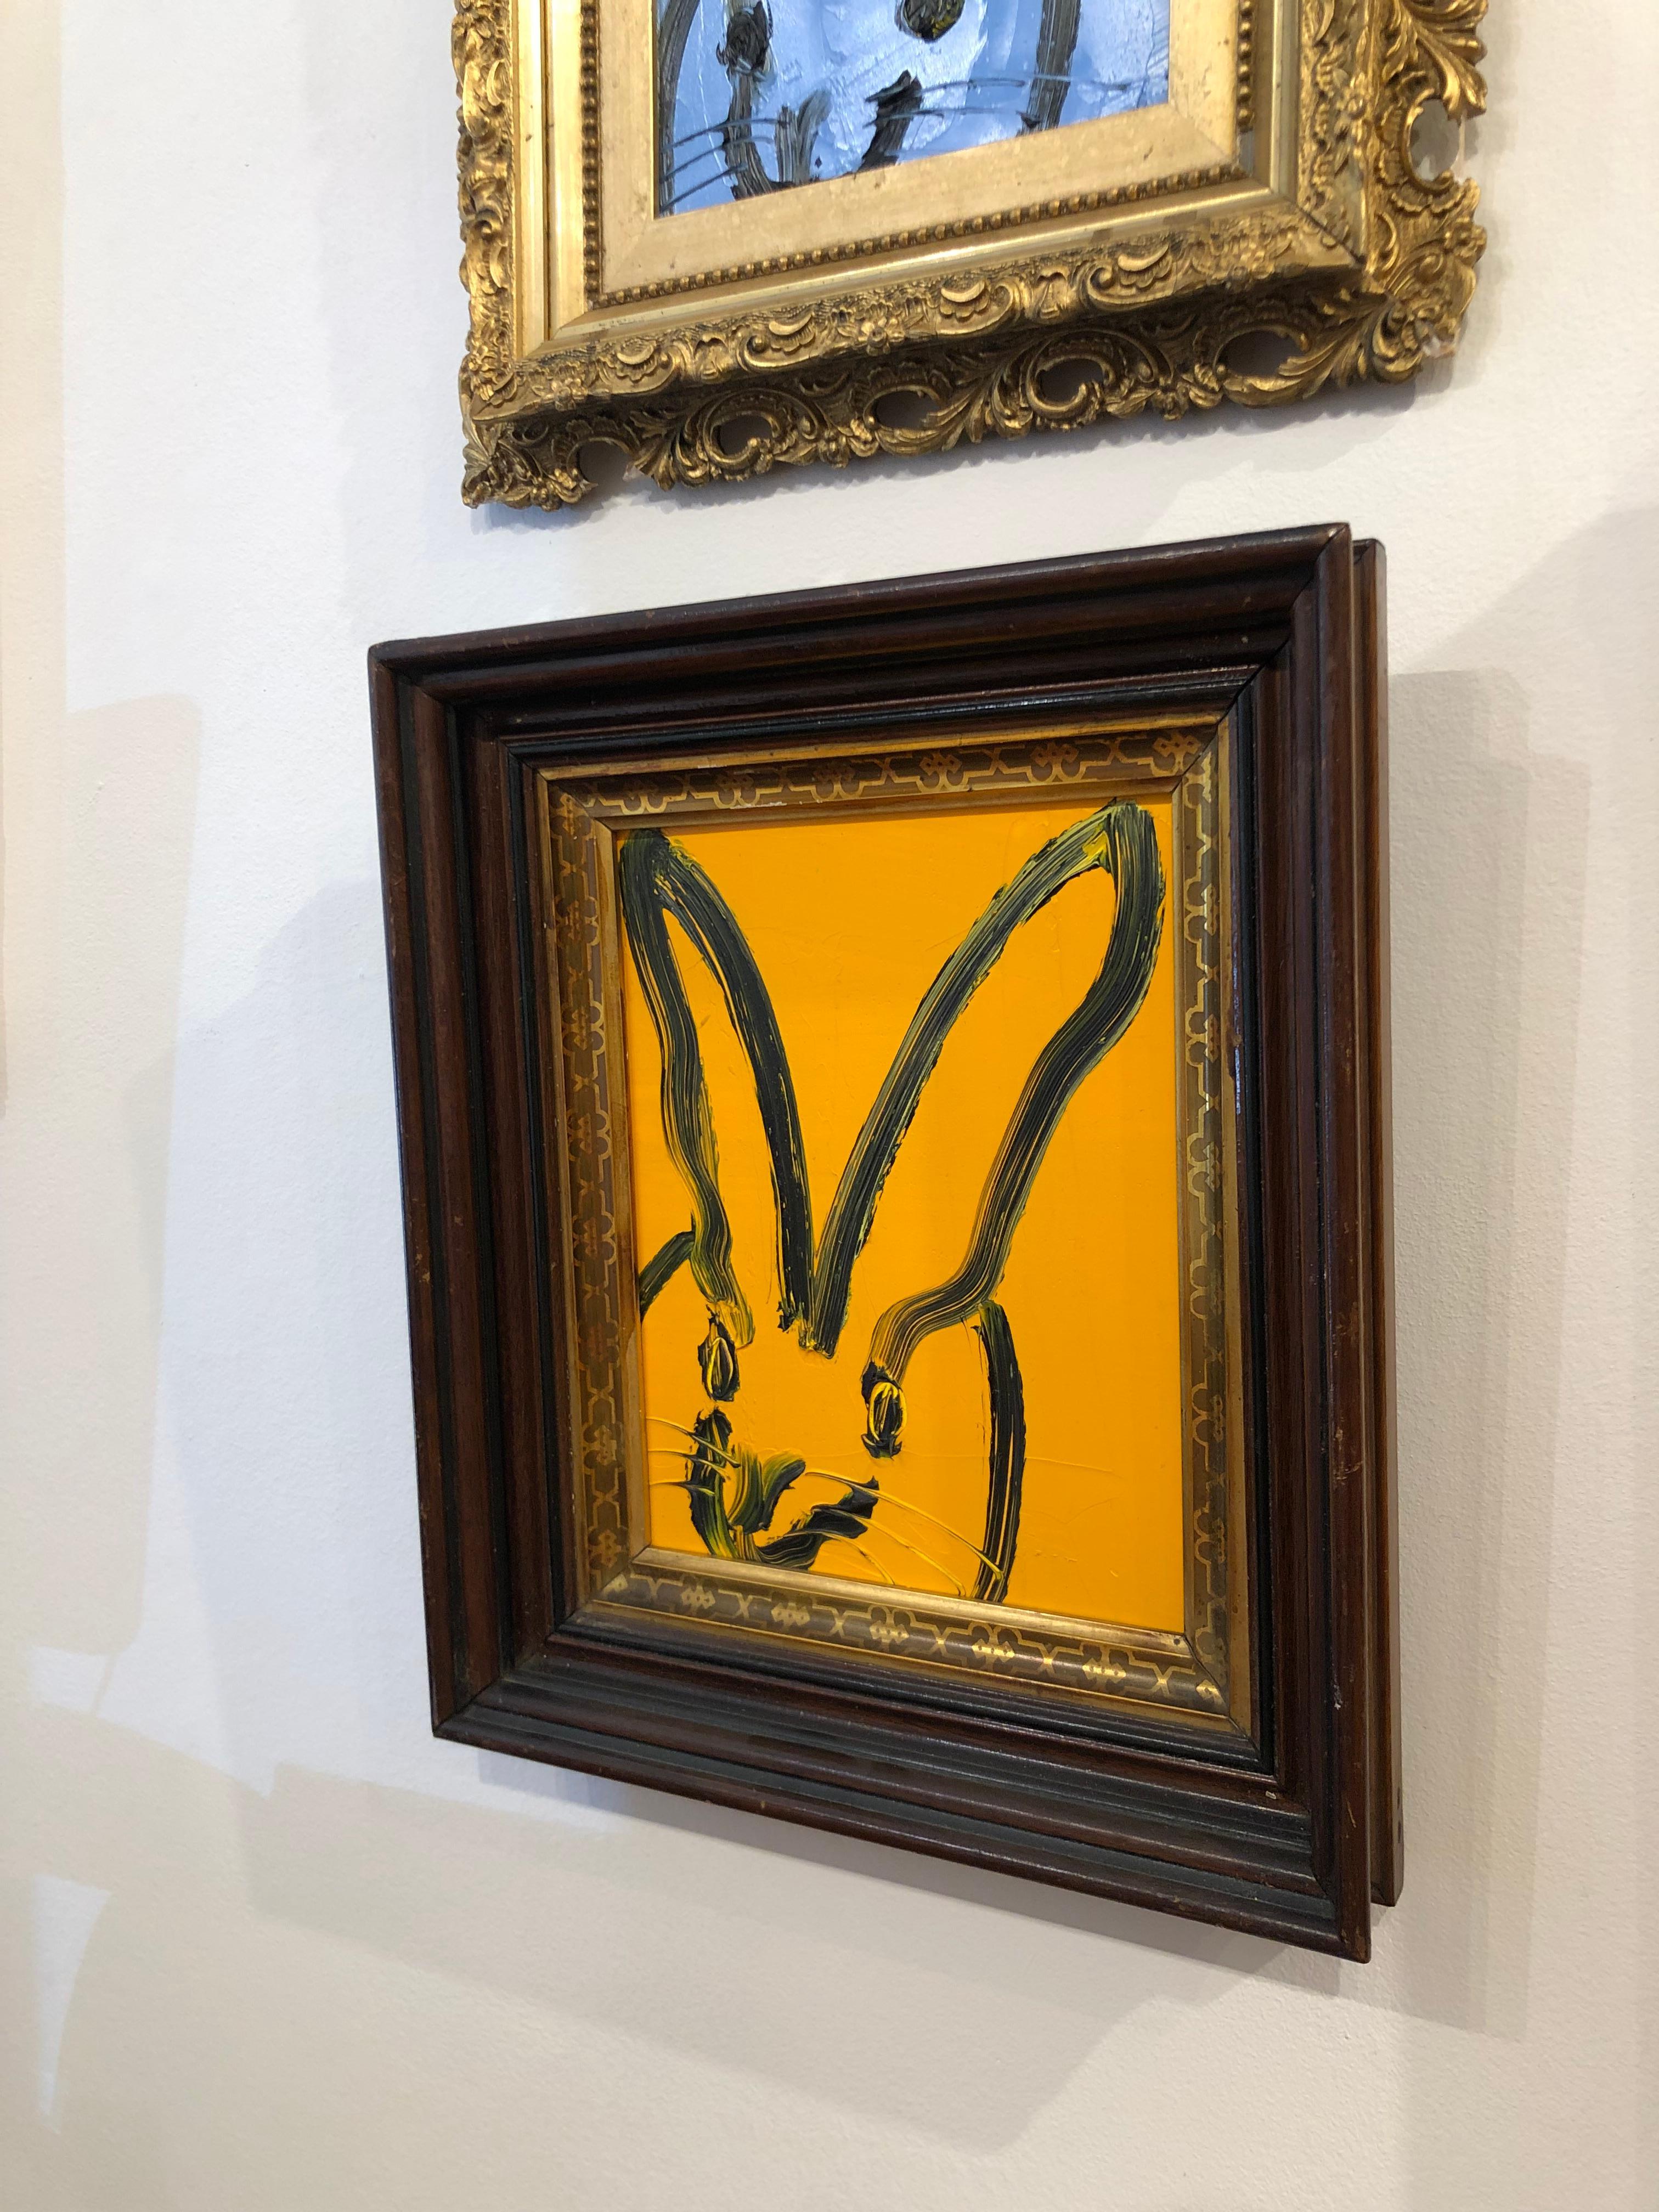 Artist:  Slonem, Hunt
Title:  Marigold Bunny
Series:  Bunnies
Date:  2018
Medium:  Oil on panel
Unframed Dimensions:  10